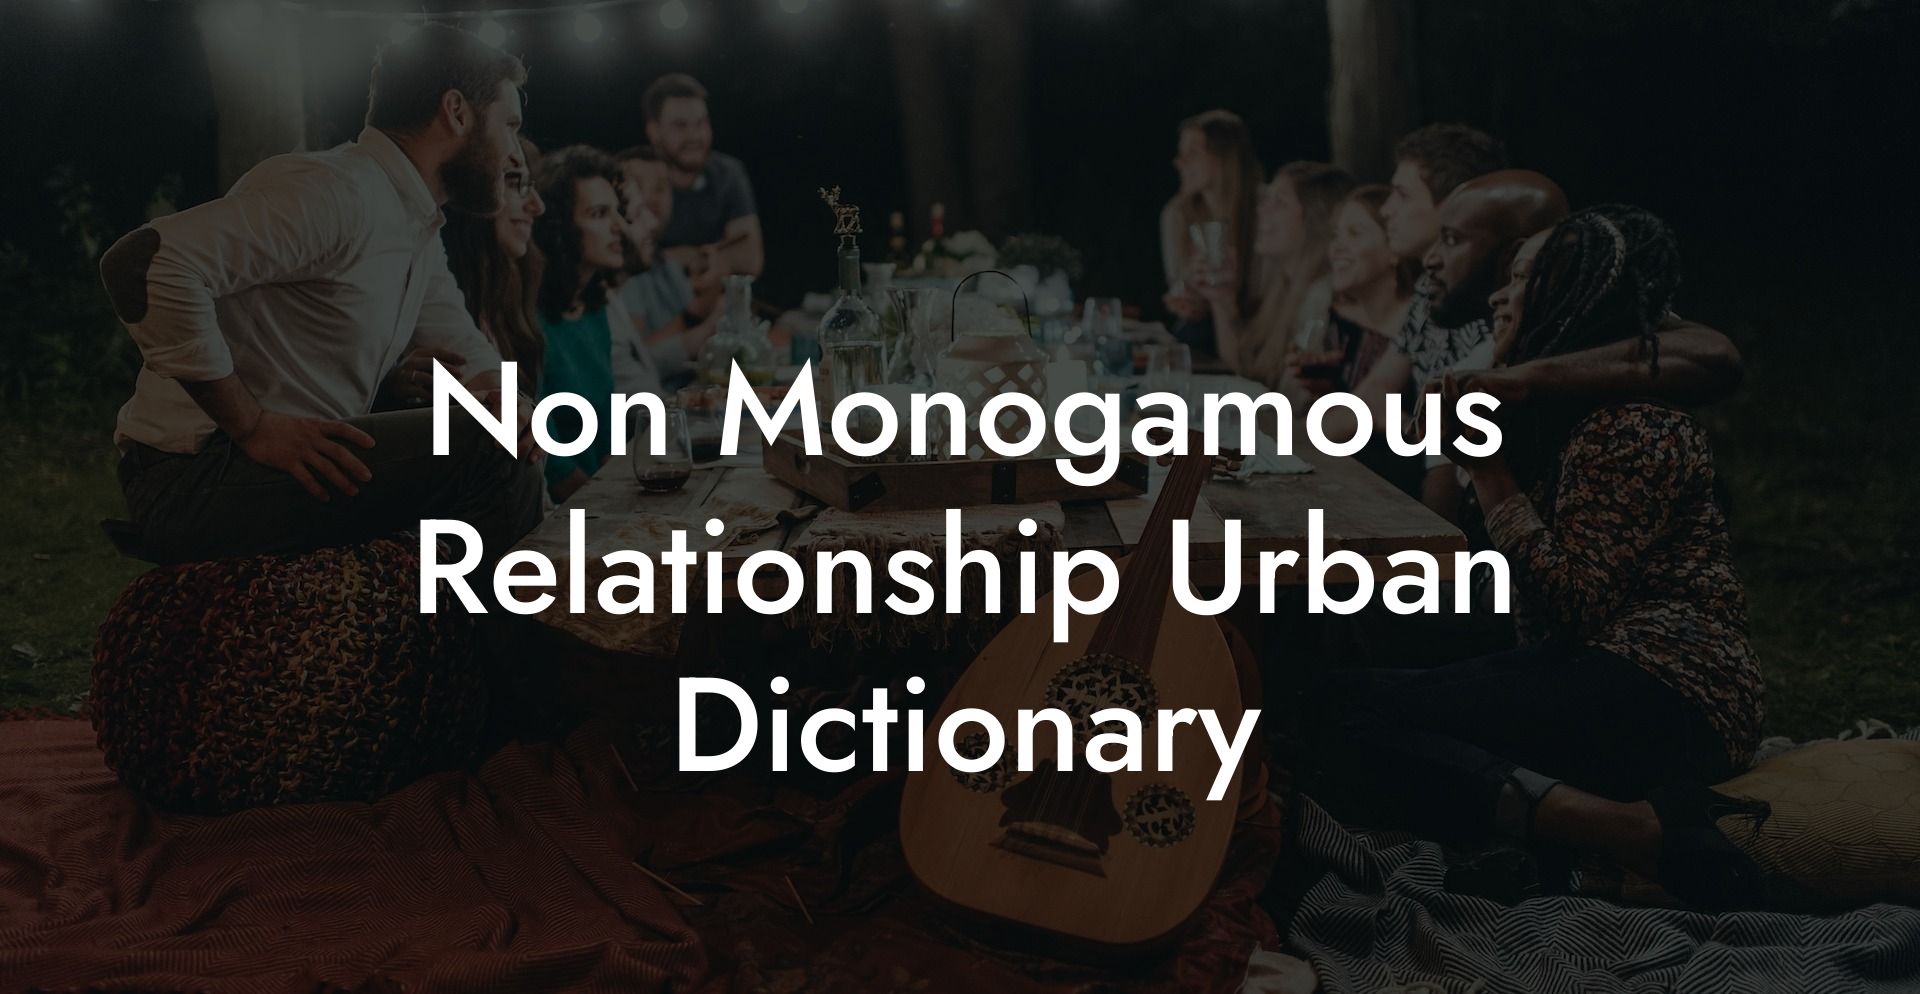 Non Monogamous Relationship Urban Dictionary